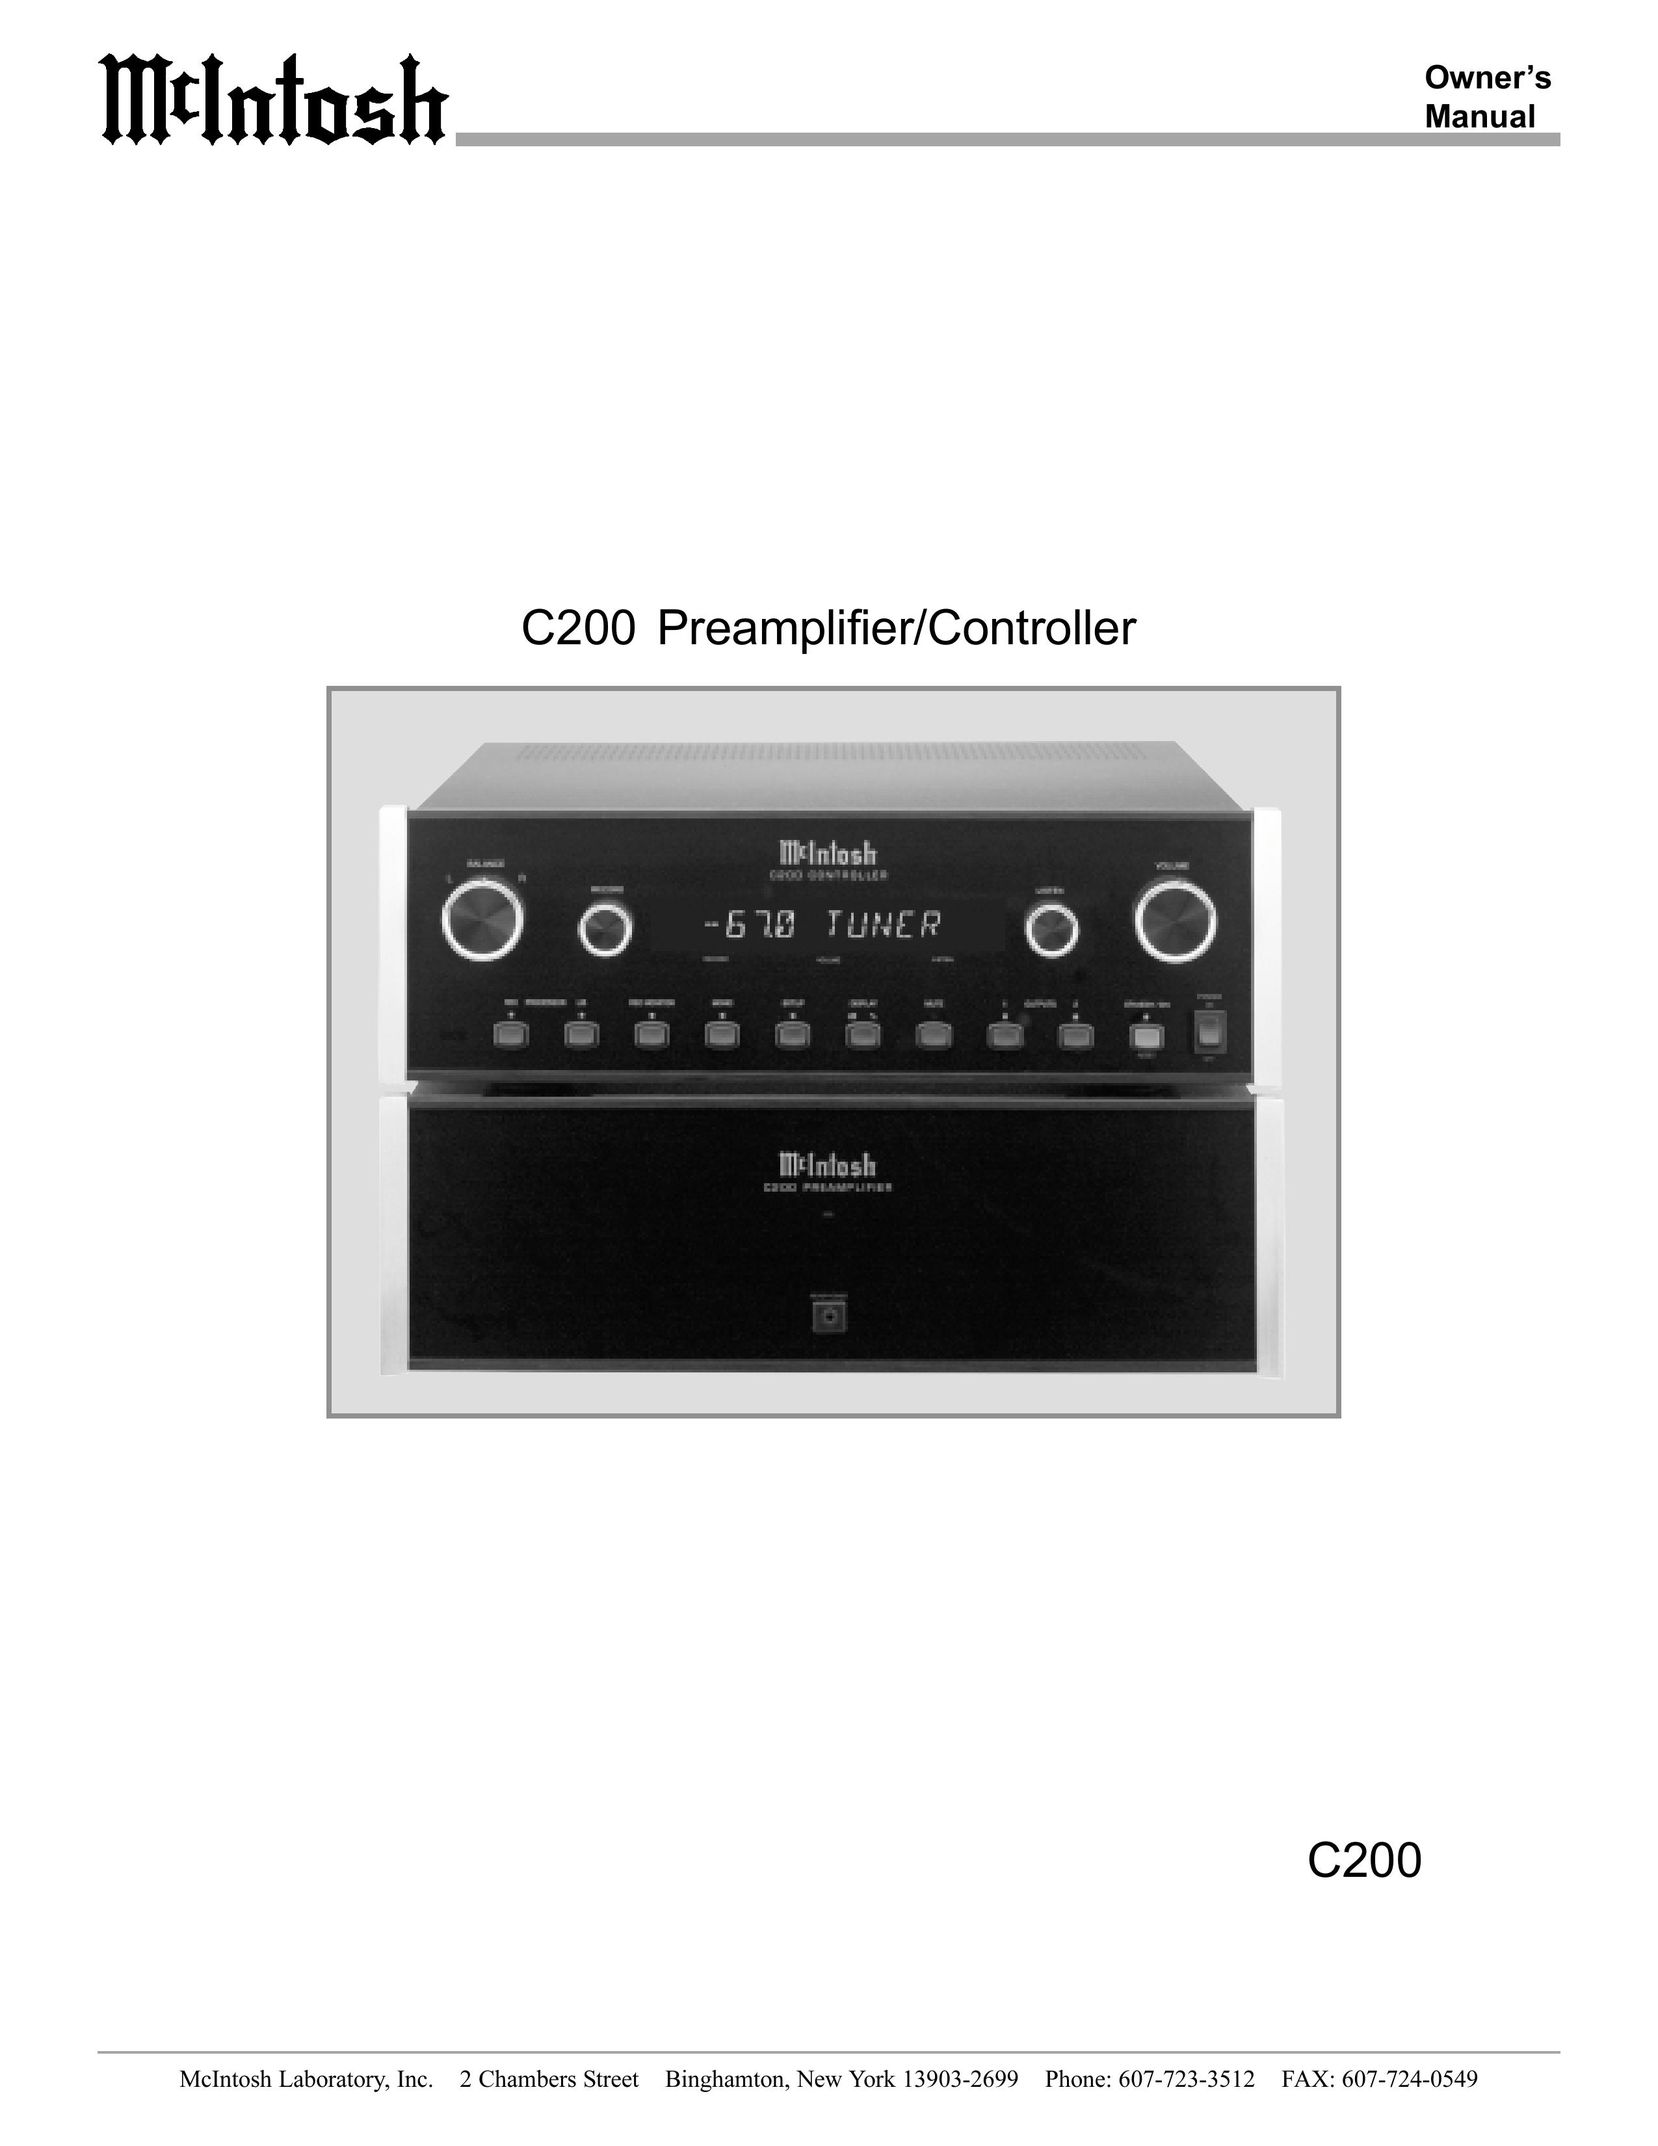 McIntosh C200 Stereo Amplifier User Manual